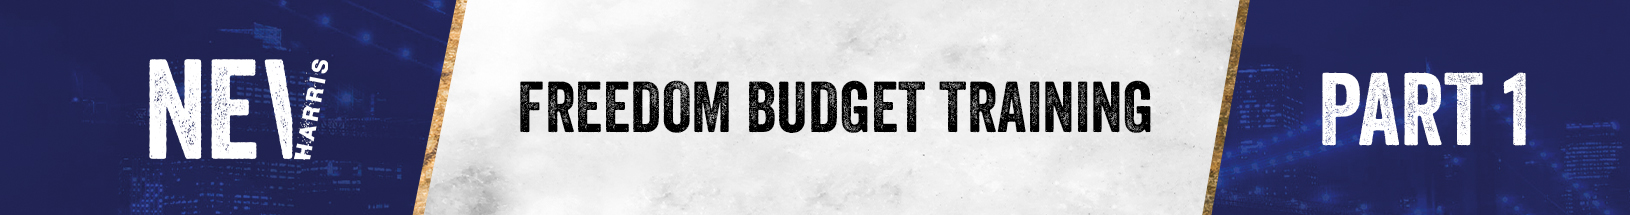 Freedom Budget Training Part 1.1